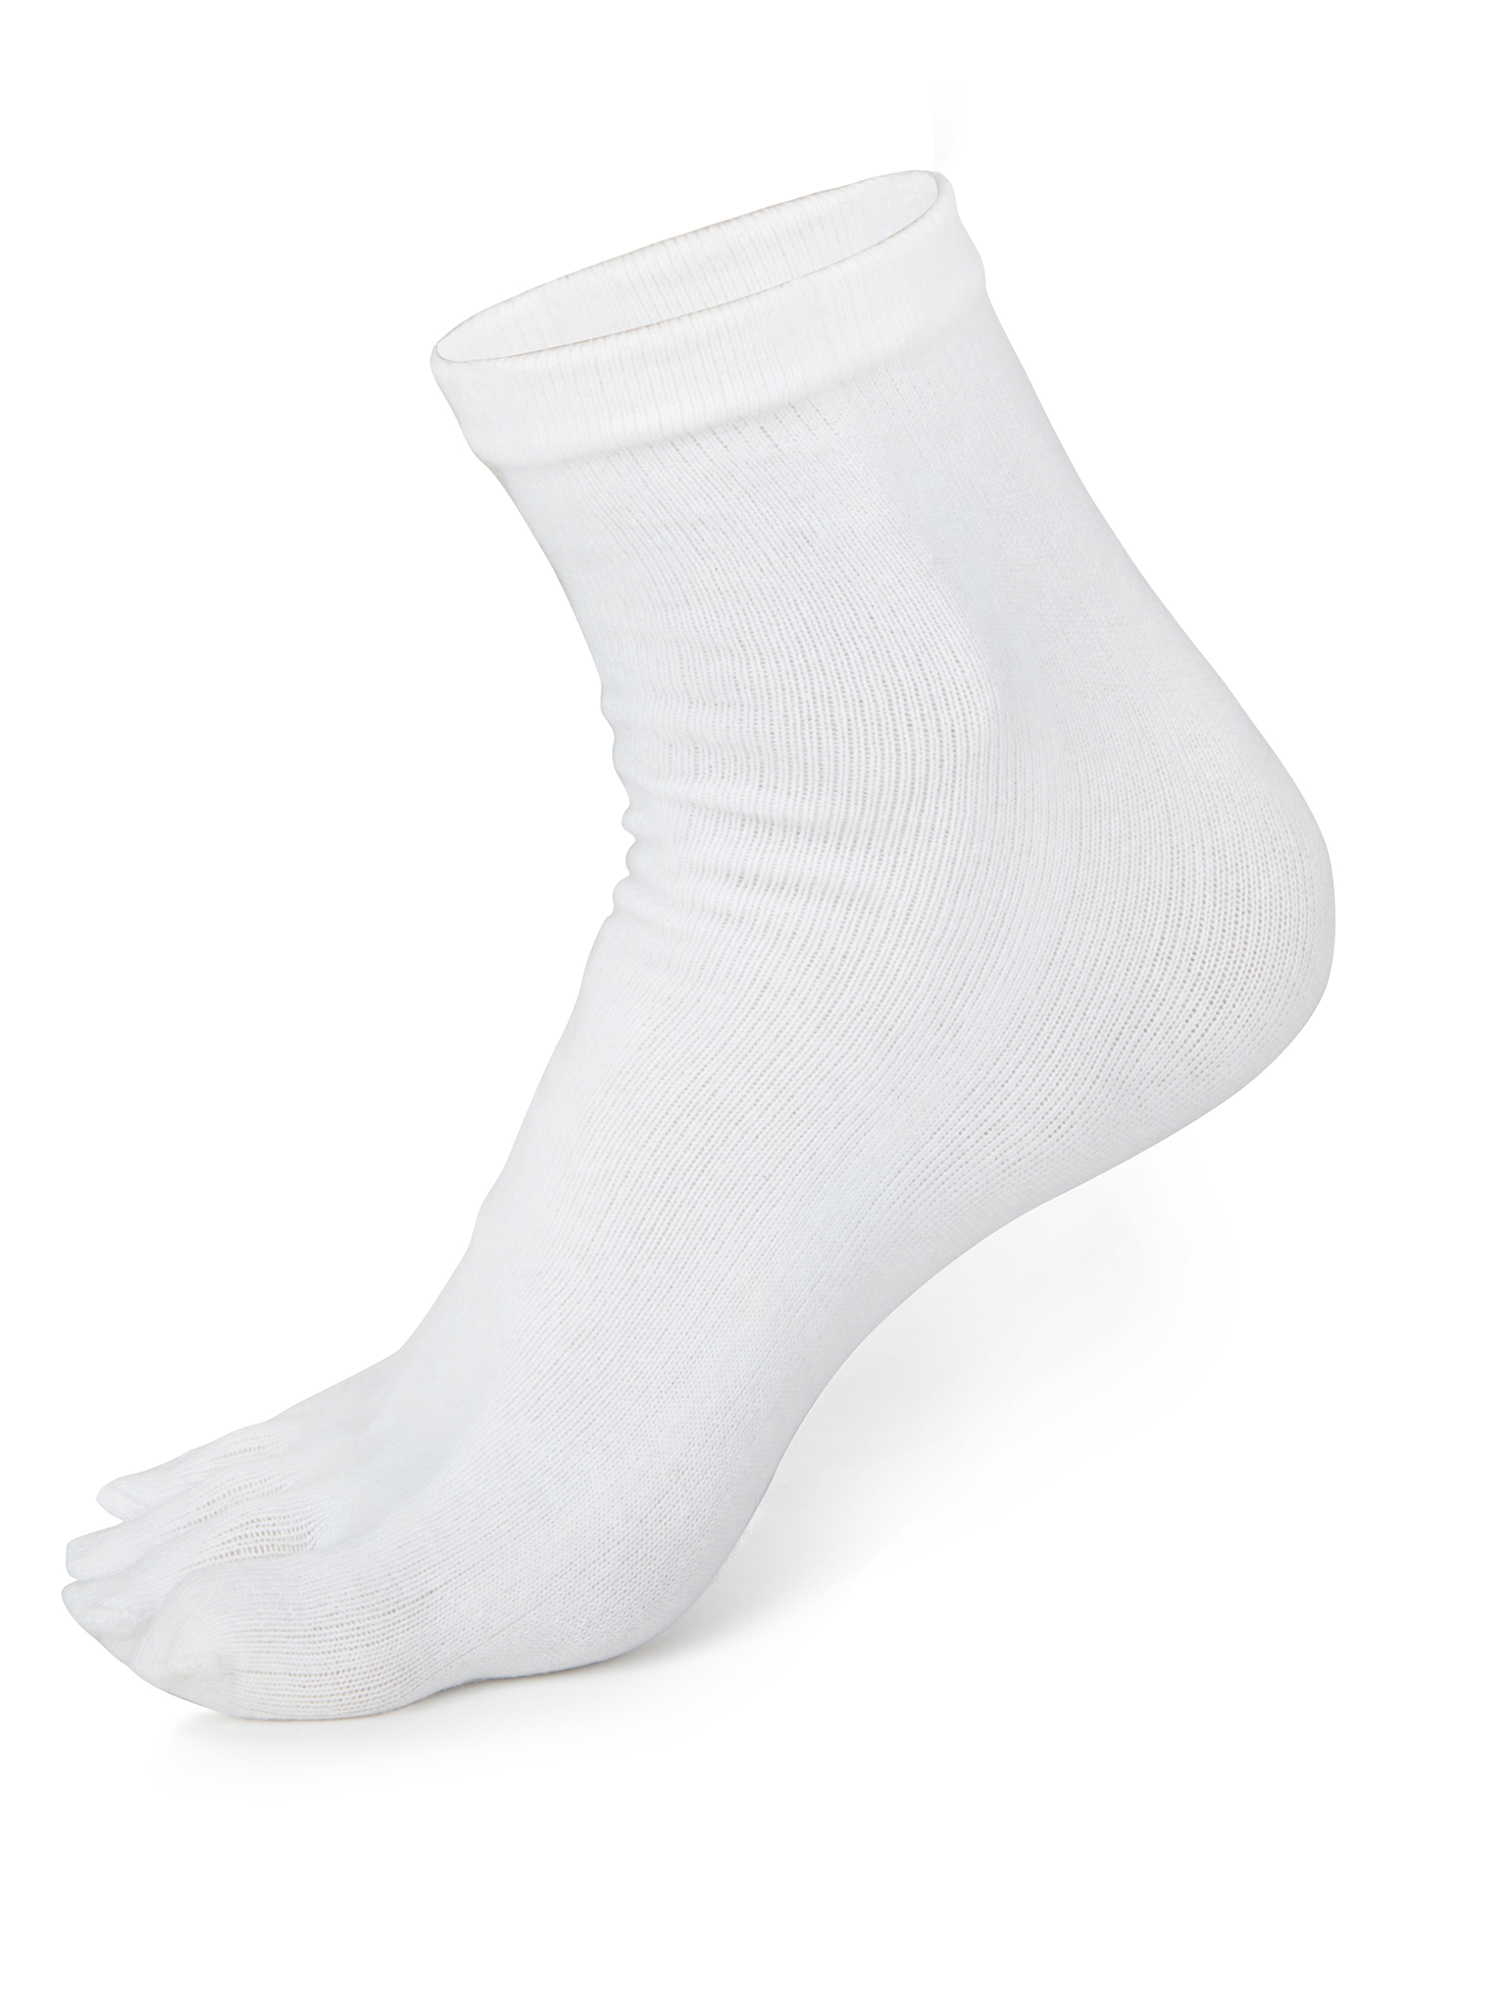 Men's Toe Socks 5 Finger Toe Flip Flop Socks Cotton 3 Pairs Casual Tabi Style Stylish Fun Premium Cotton Socks (3 Pack) - image 2 of 6